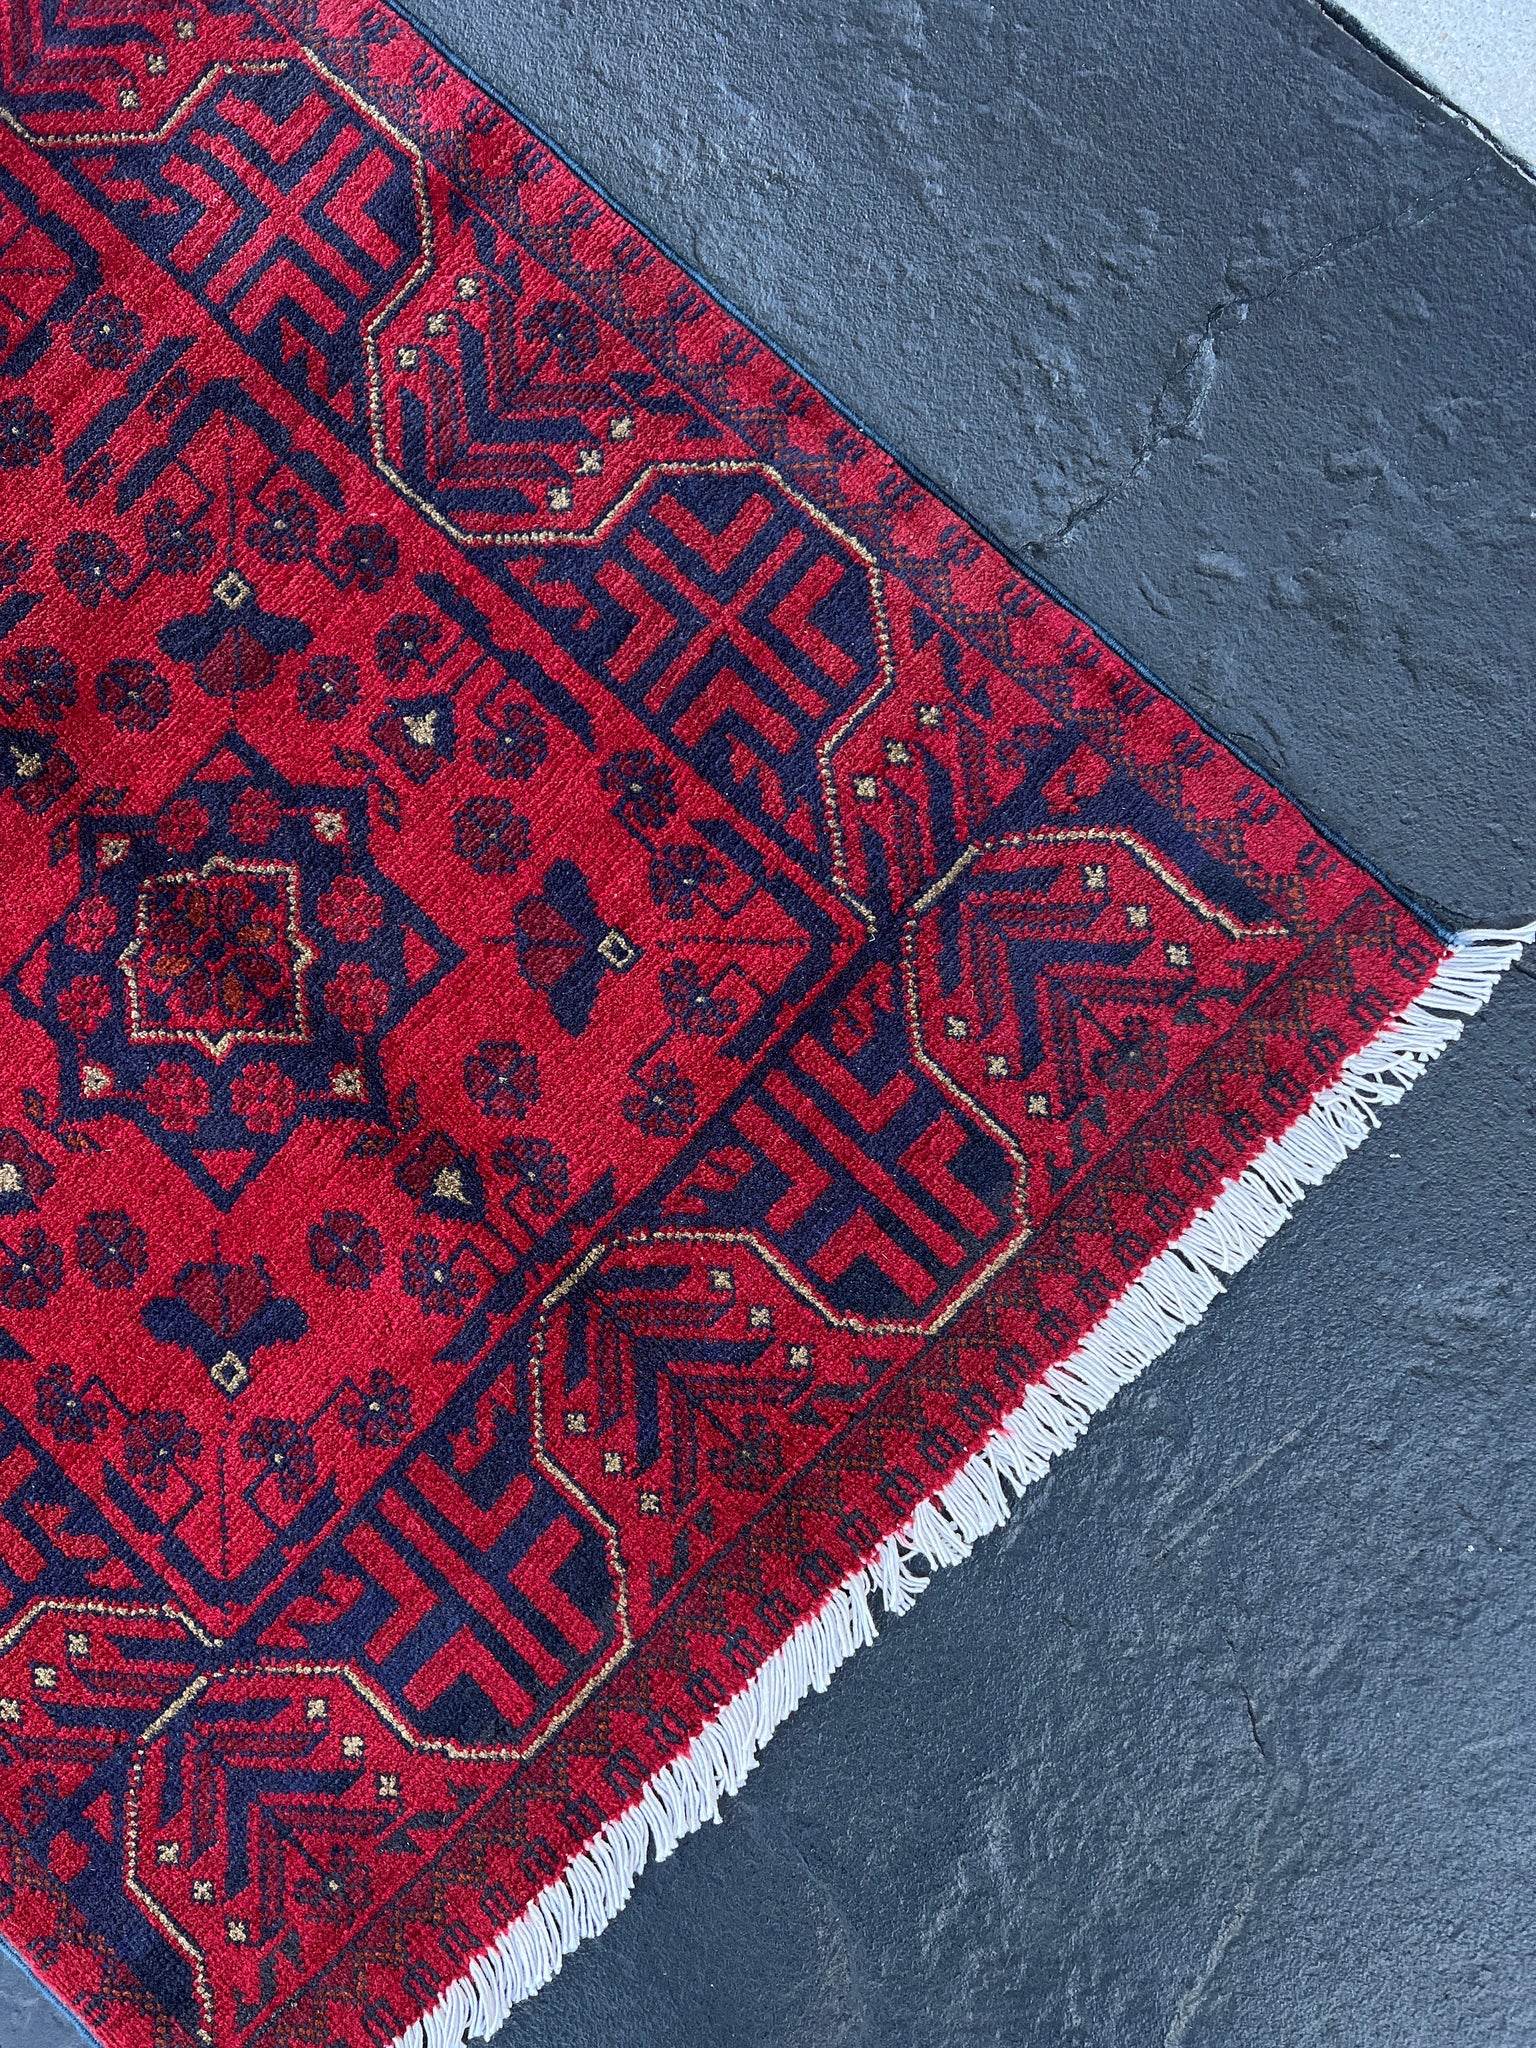 2x4 - 3x4 Fair Trade Handmade Afghan Rug | Crimson Garnet Red Midnight Sky Blue Burnt Orange White | Knotted Oriental Turkish Wool Persian